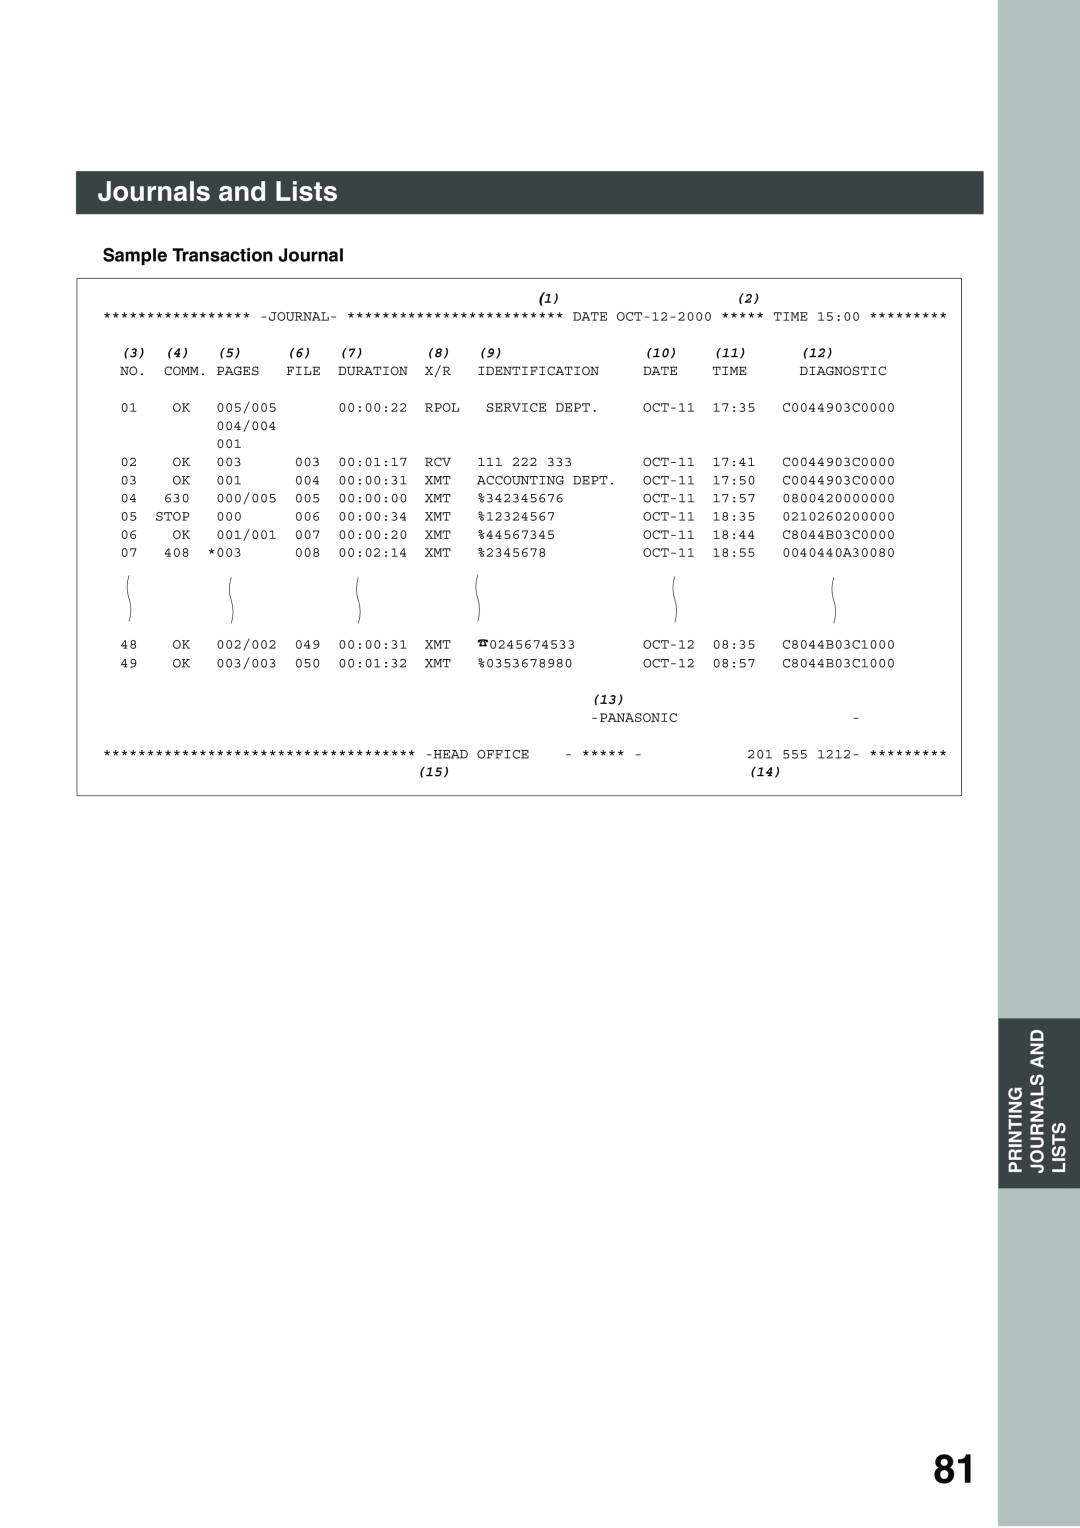 Panasonic DP-135FP appendix Journals and Lists, Sample Transaction Journal, Lists Journals And 